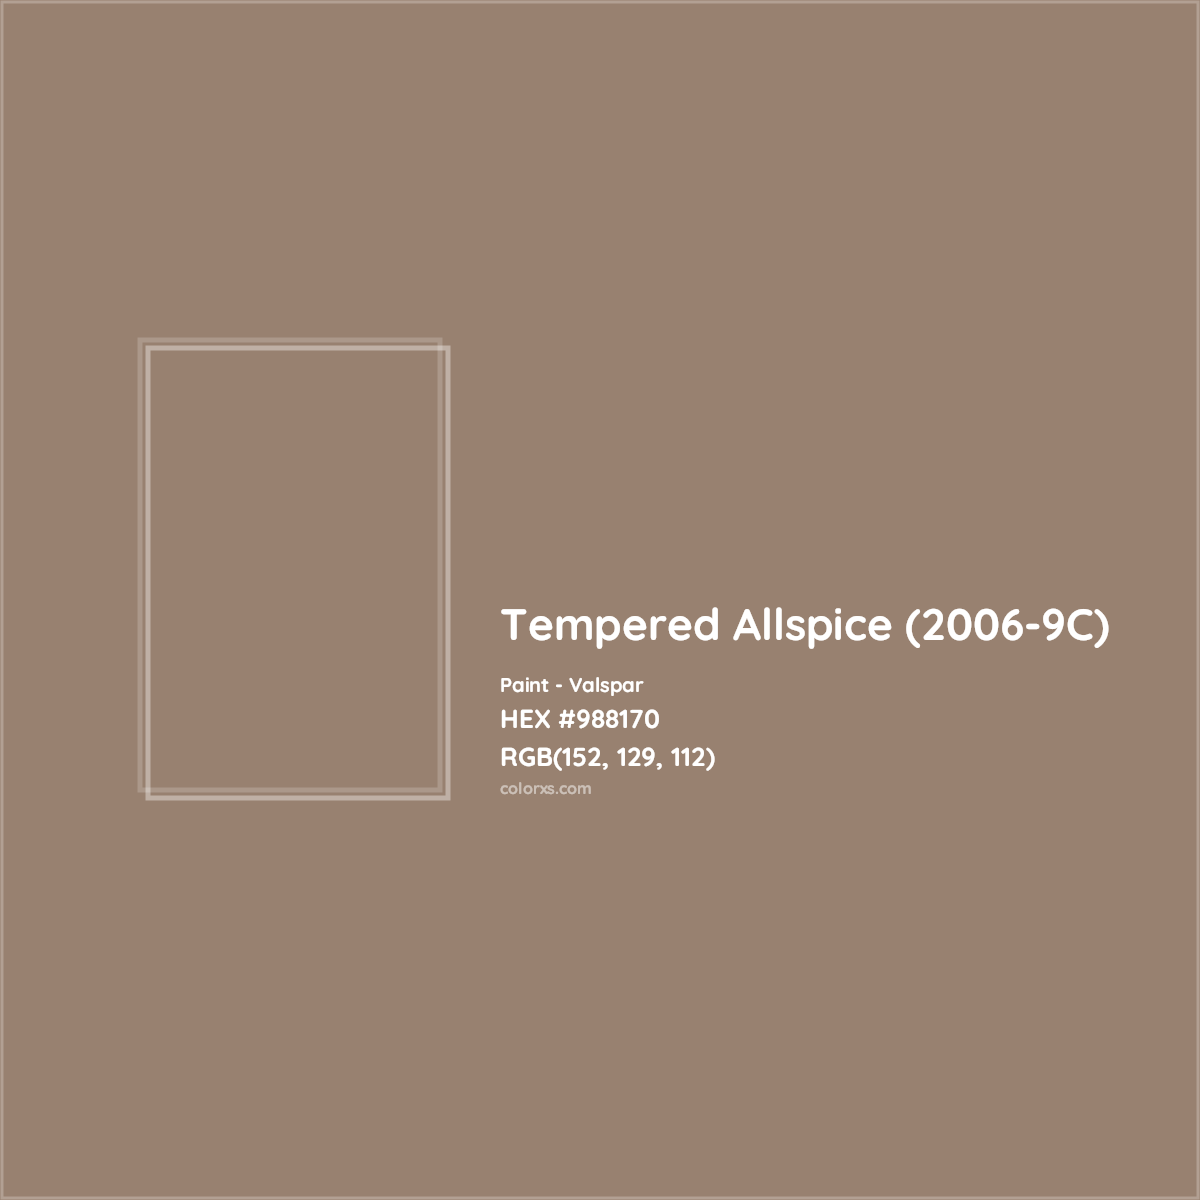 HEX #988170 Tempered Allspice (2006-9C) Paint Valspar - Color Code